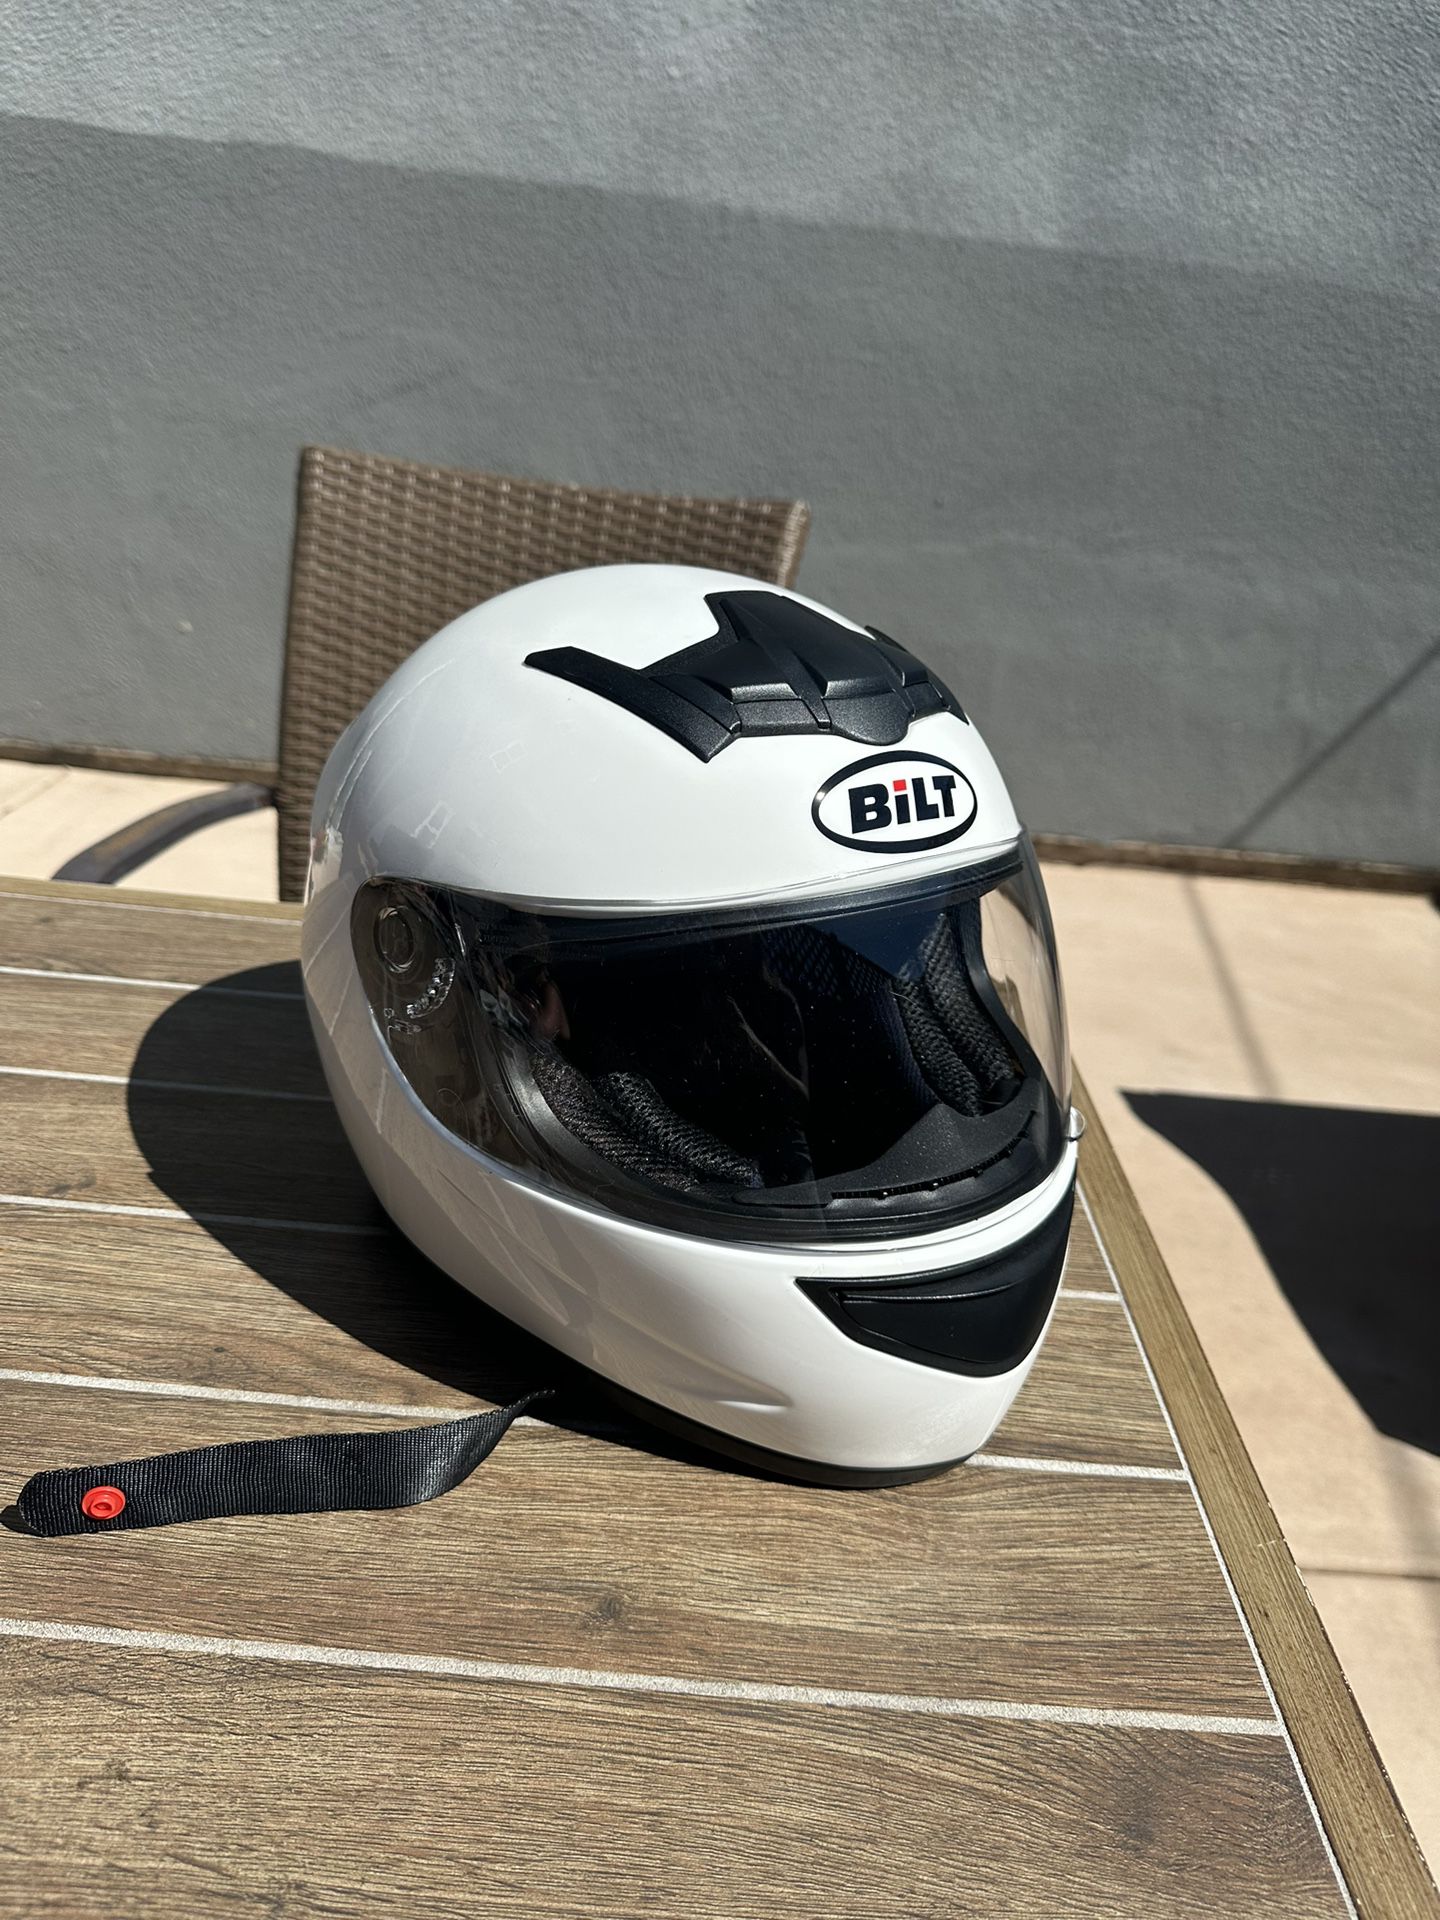 BILT small motorcycle helmet